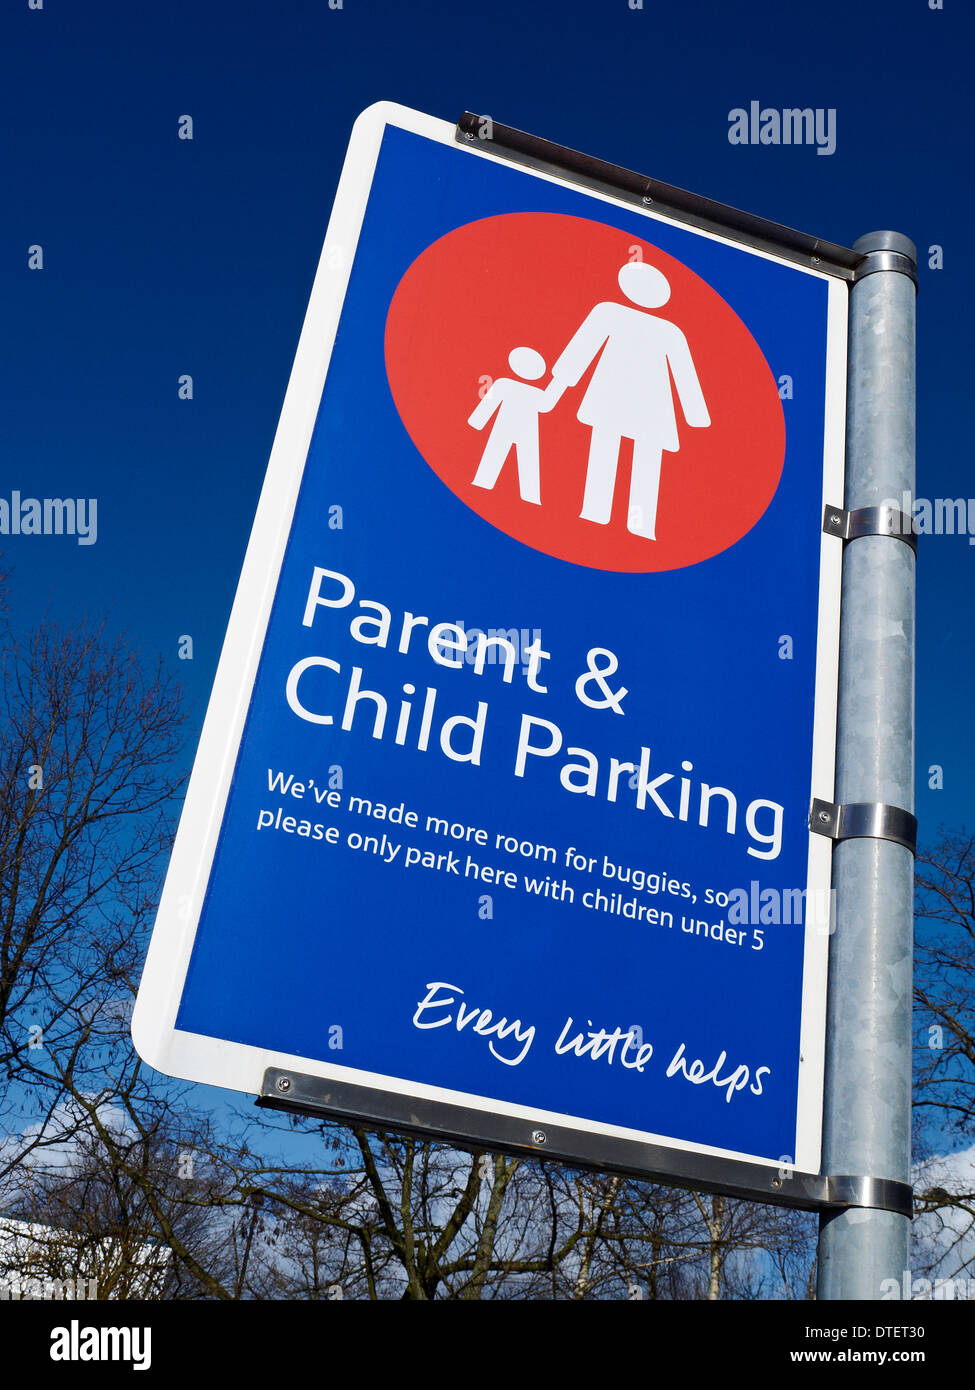 Tesco parent & Child cartel de estacionamiento UK Foto de stock